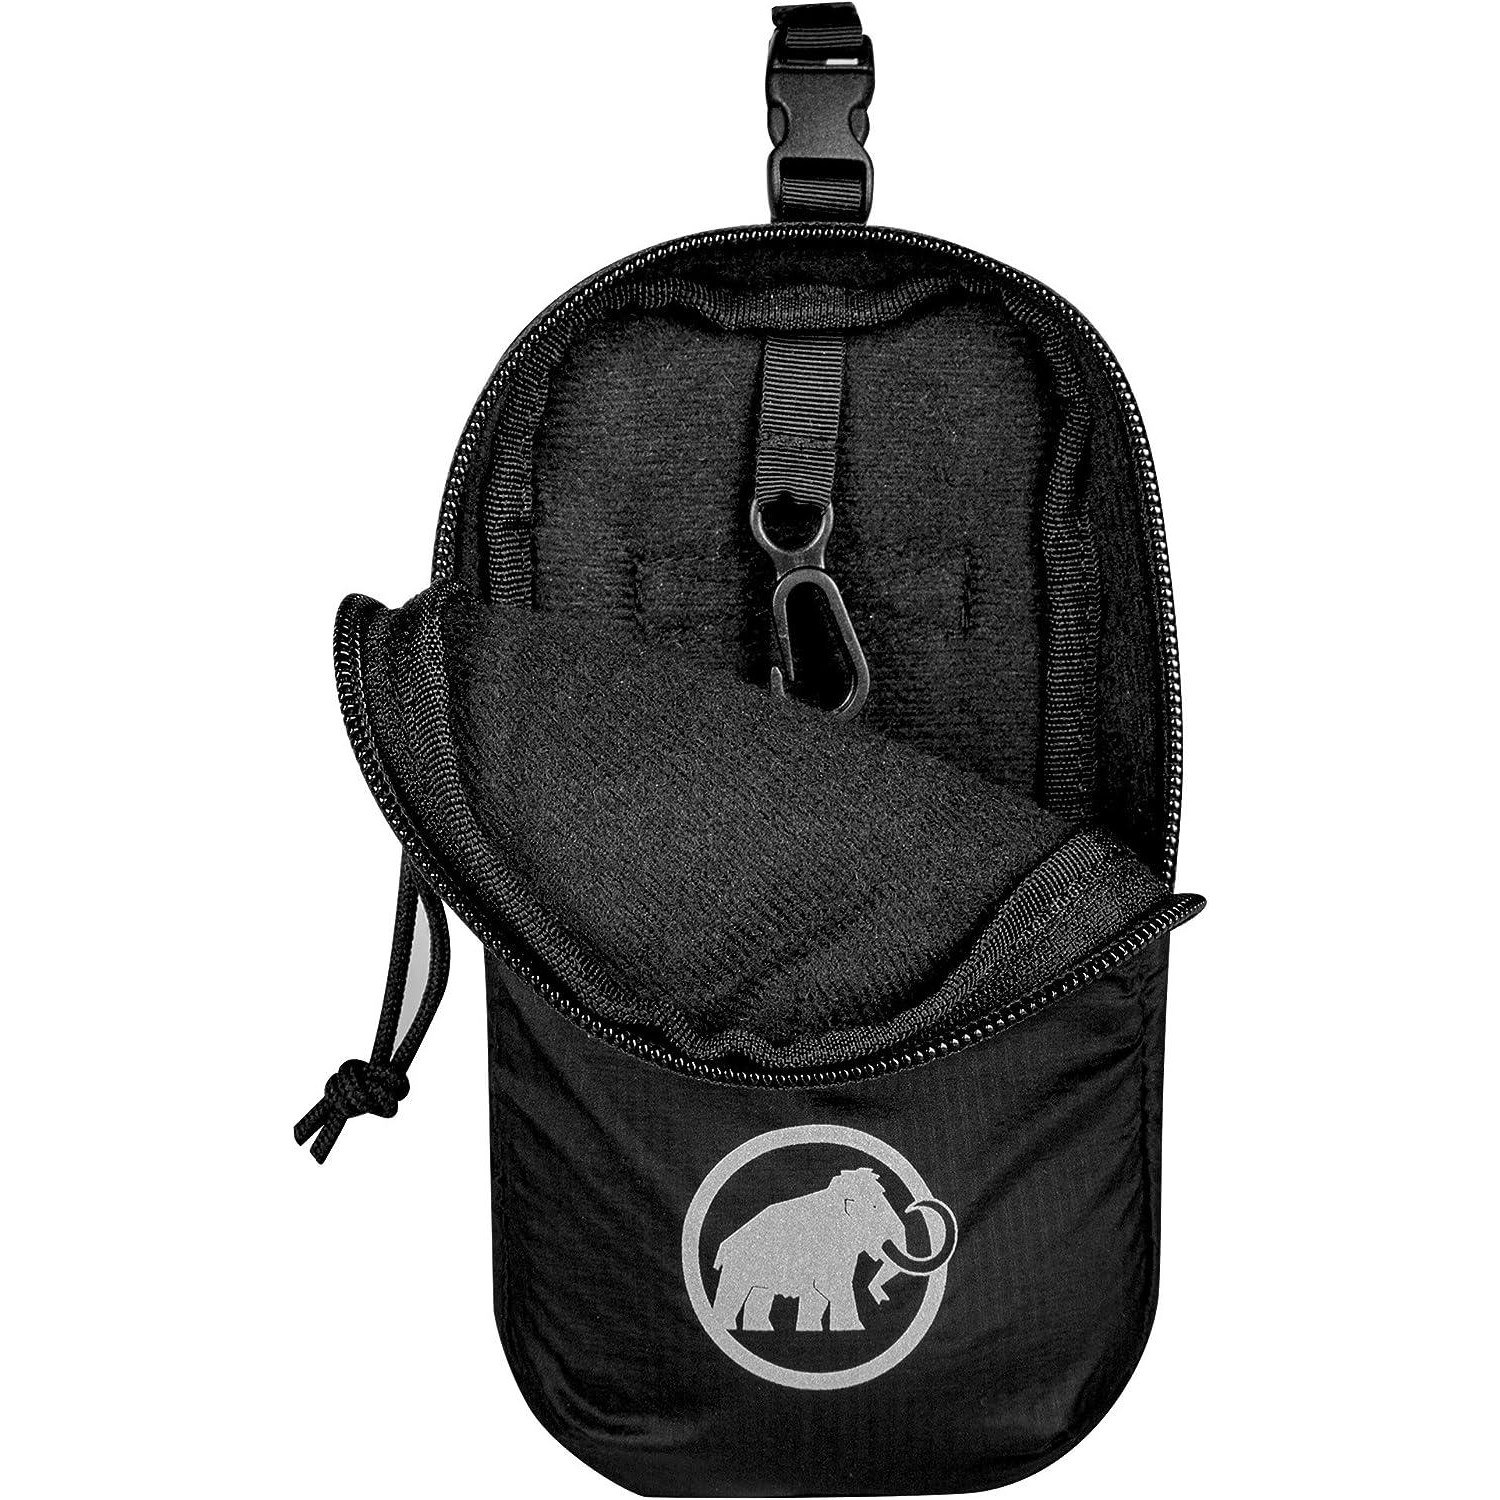 Mammut Lithium Add-on Shoulder Harness Pocket Medium Backpack Attachment